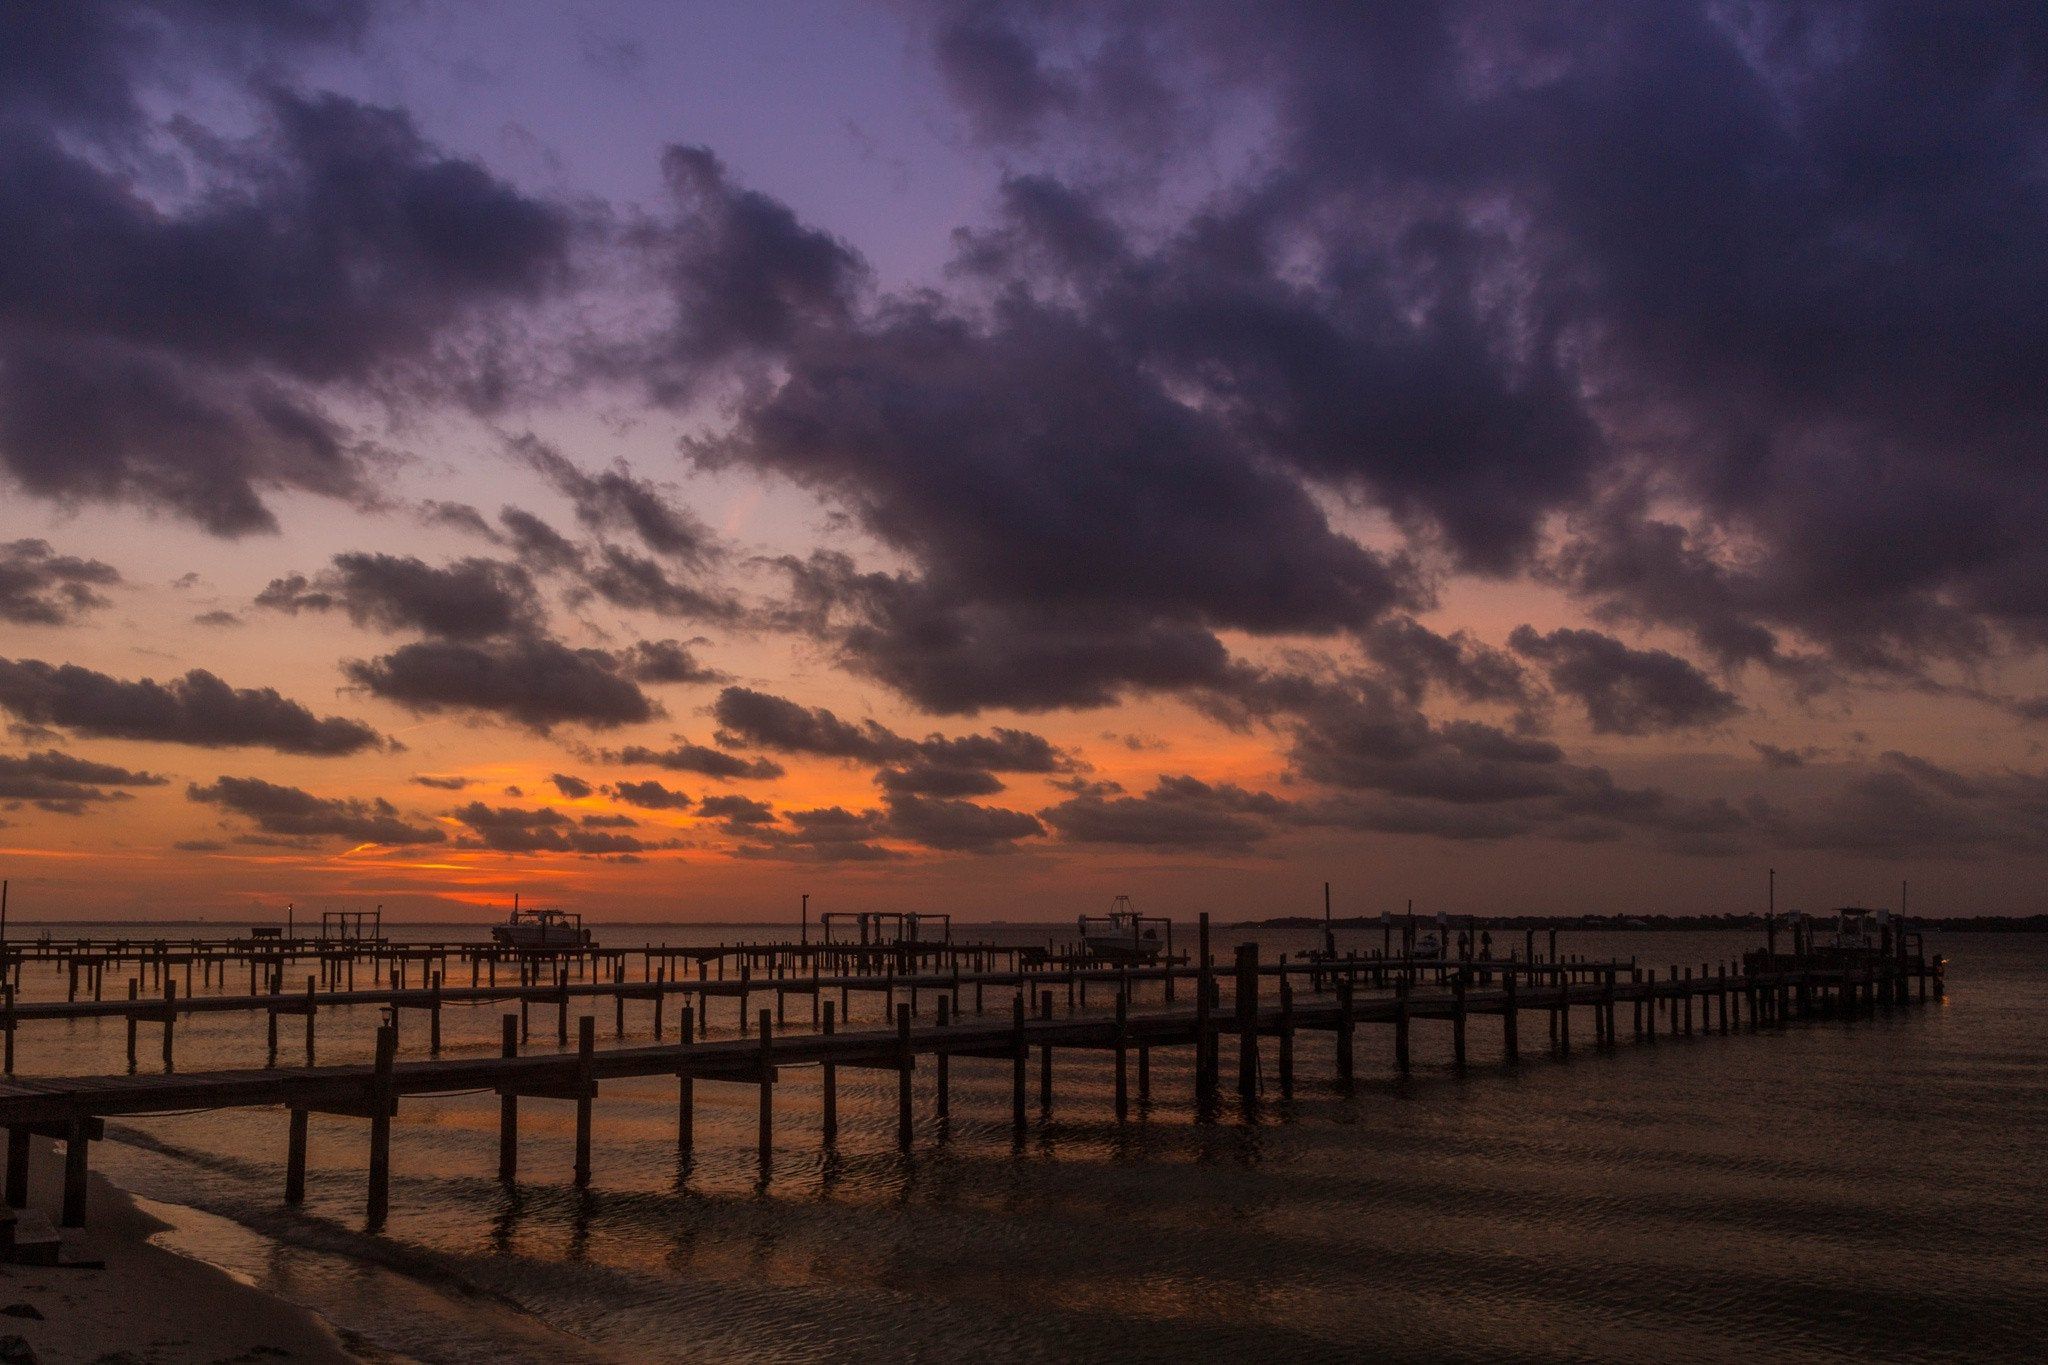 Sunset in Pensacola beach, Florida